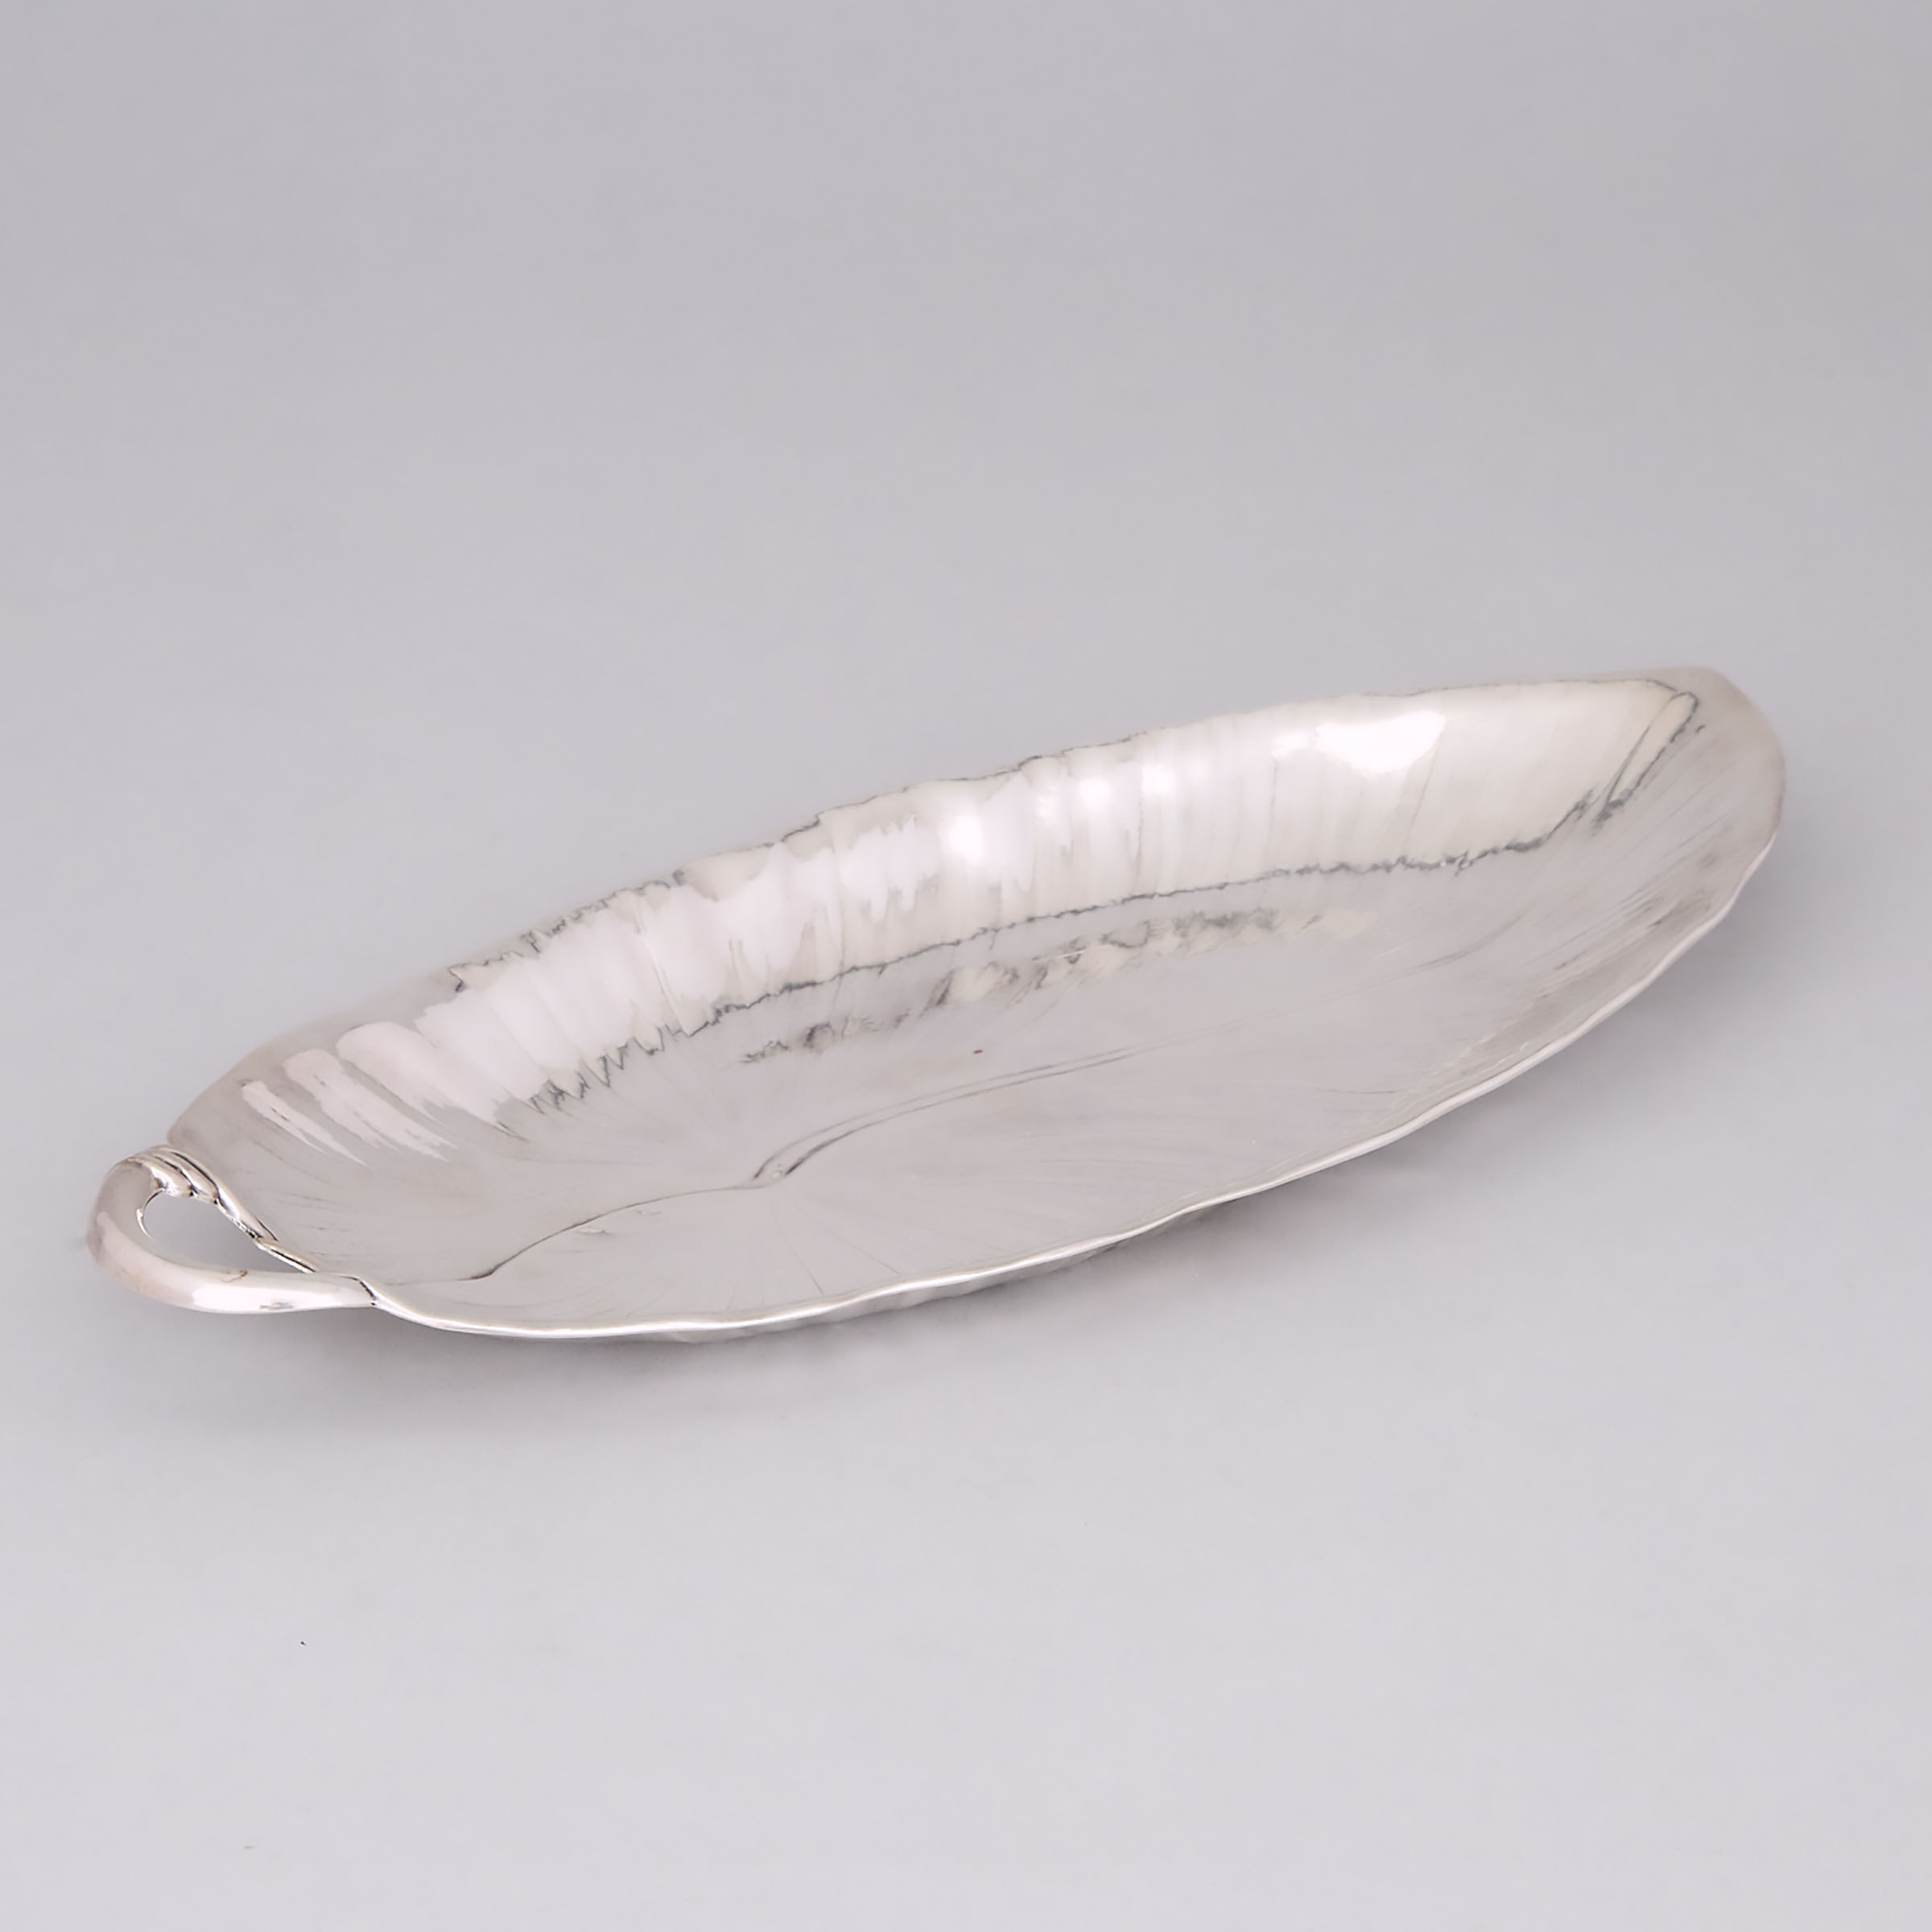 American Silver Leaf Shaped Dish, International Silver Co., Meriden, Ct., 20th century